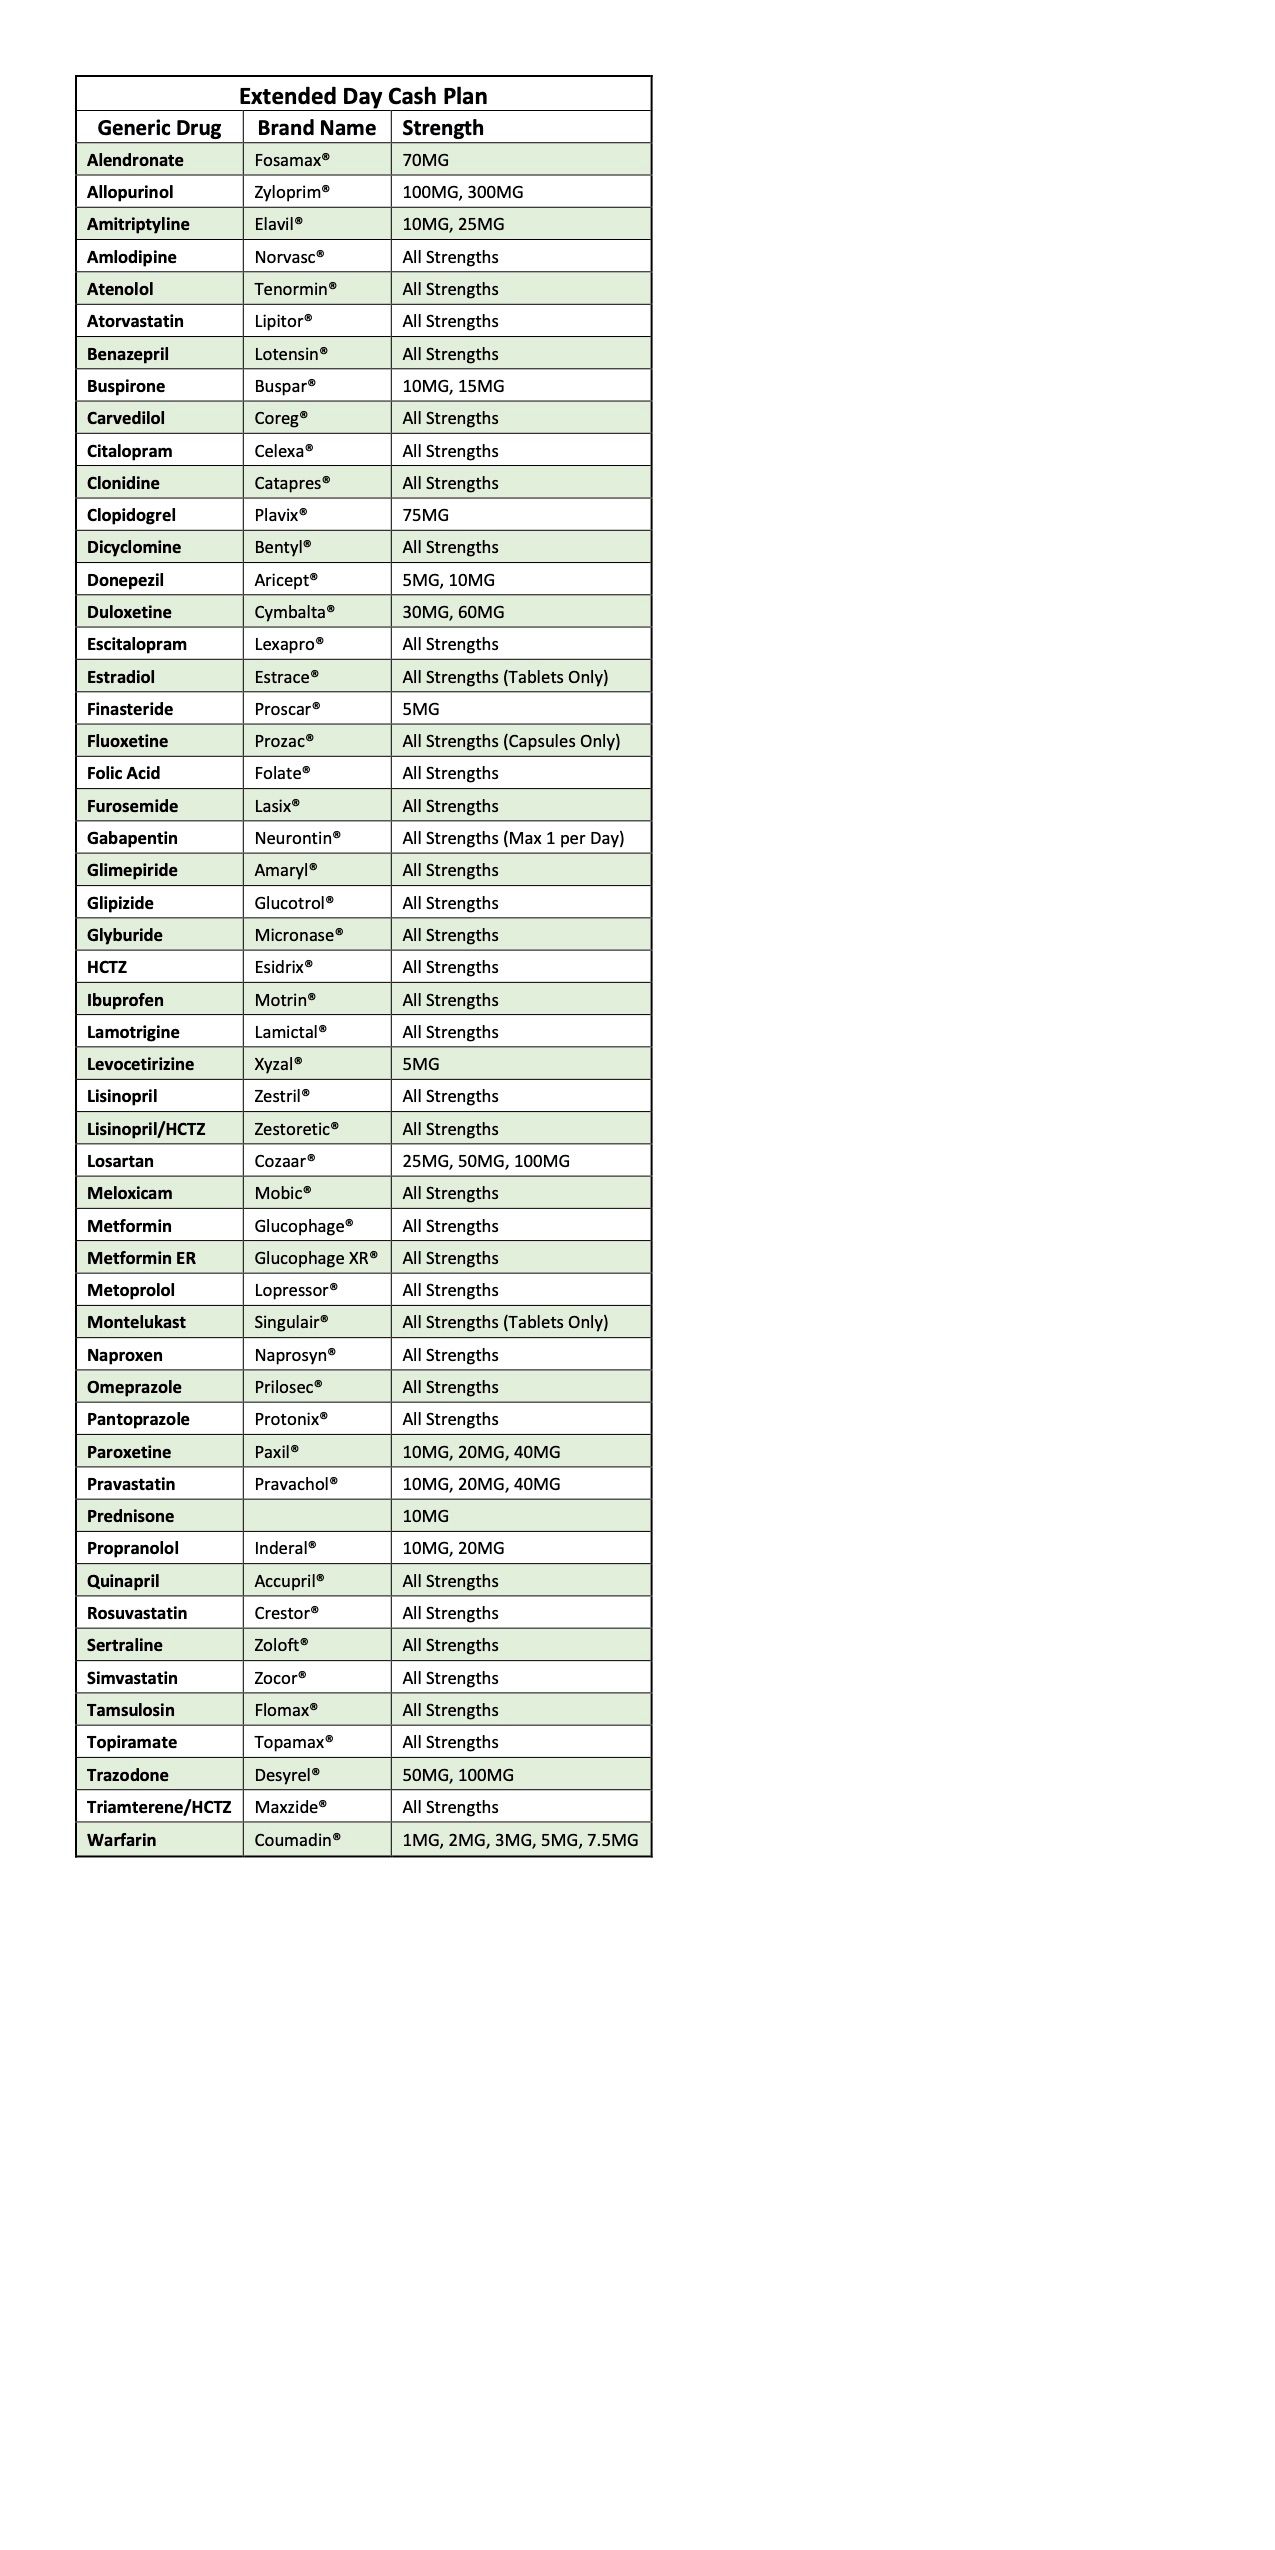 ECP Updated Drug List_10.25.21.jpg